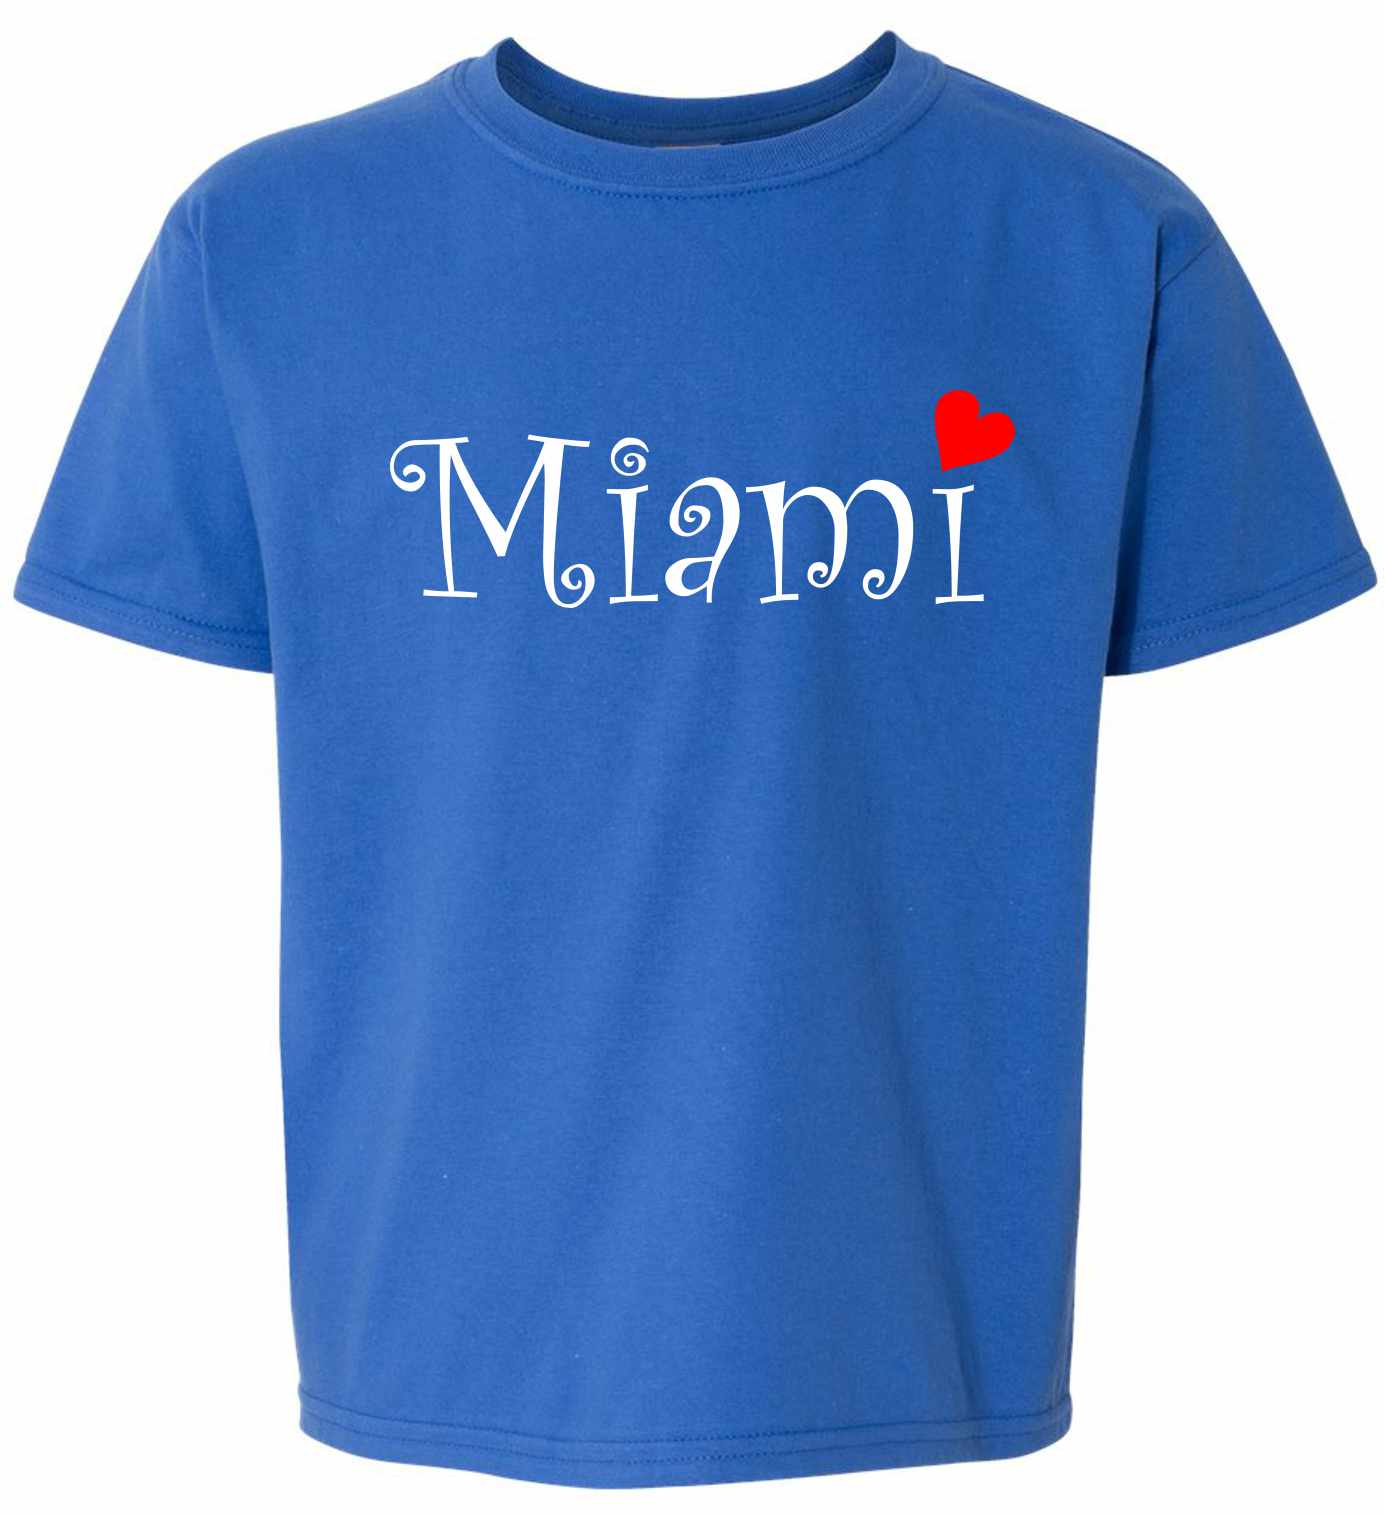 Miami City on Kids T-Shirt (#1331-201)